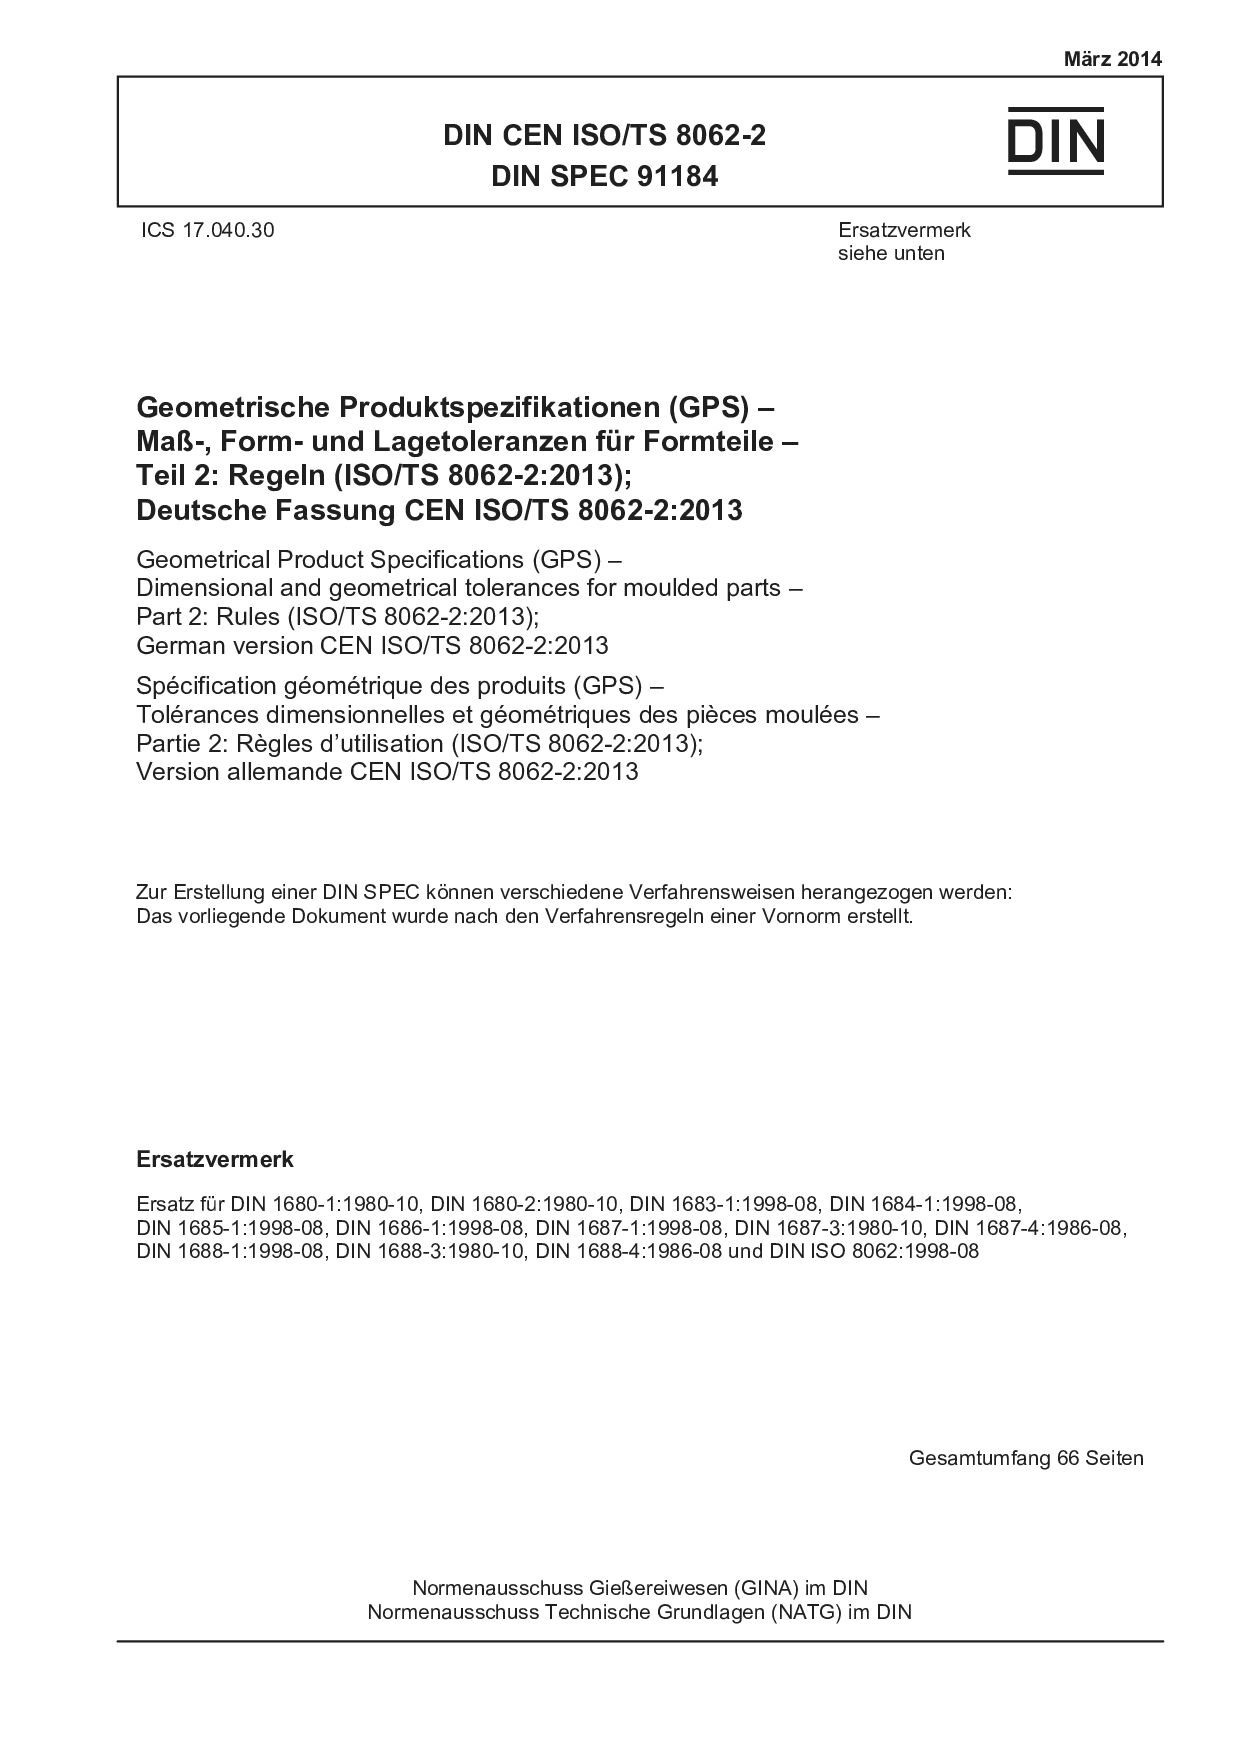 DIN CEN ISO/TS 8062-2:2014封面图